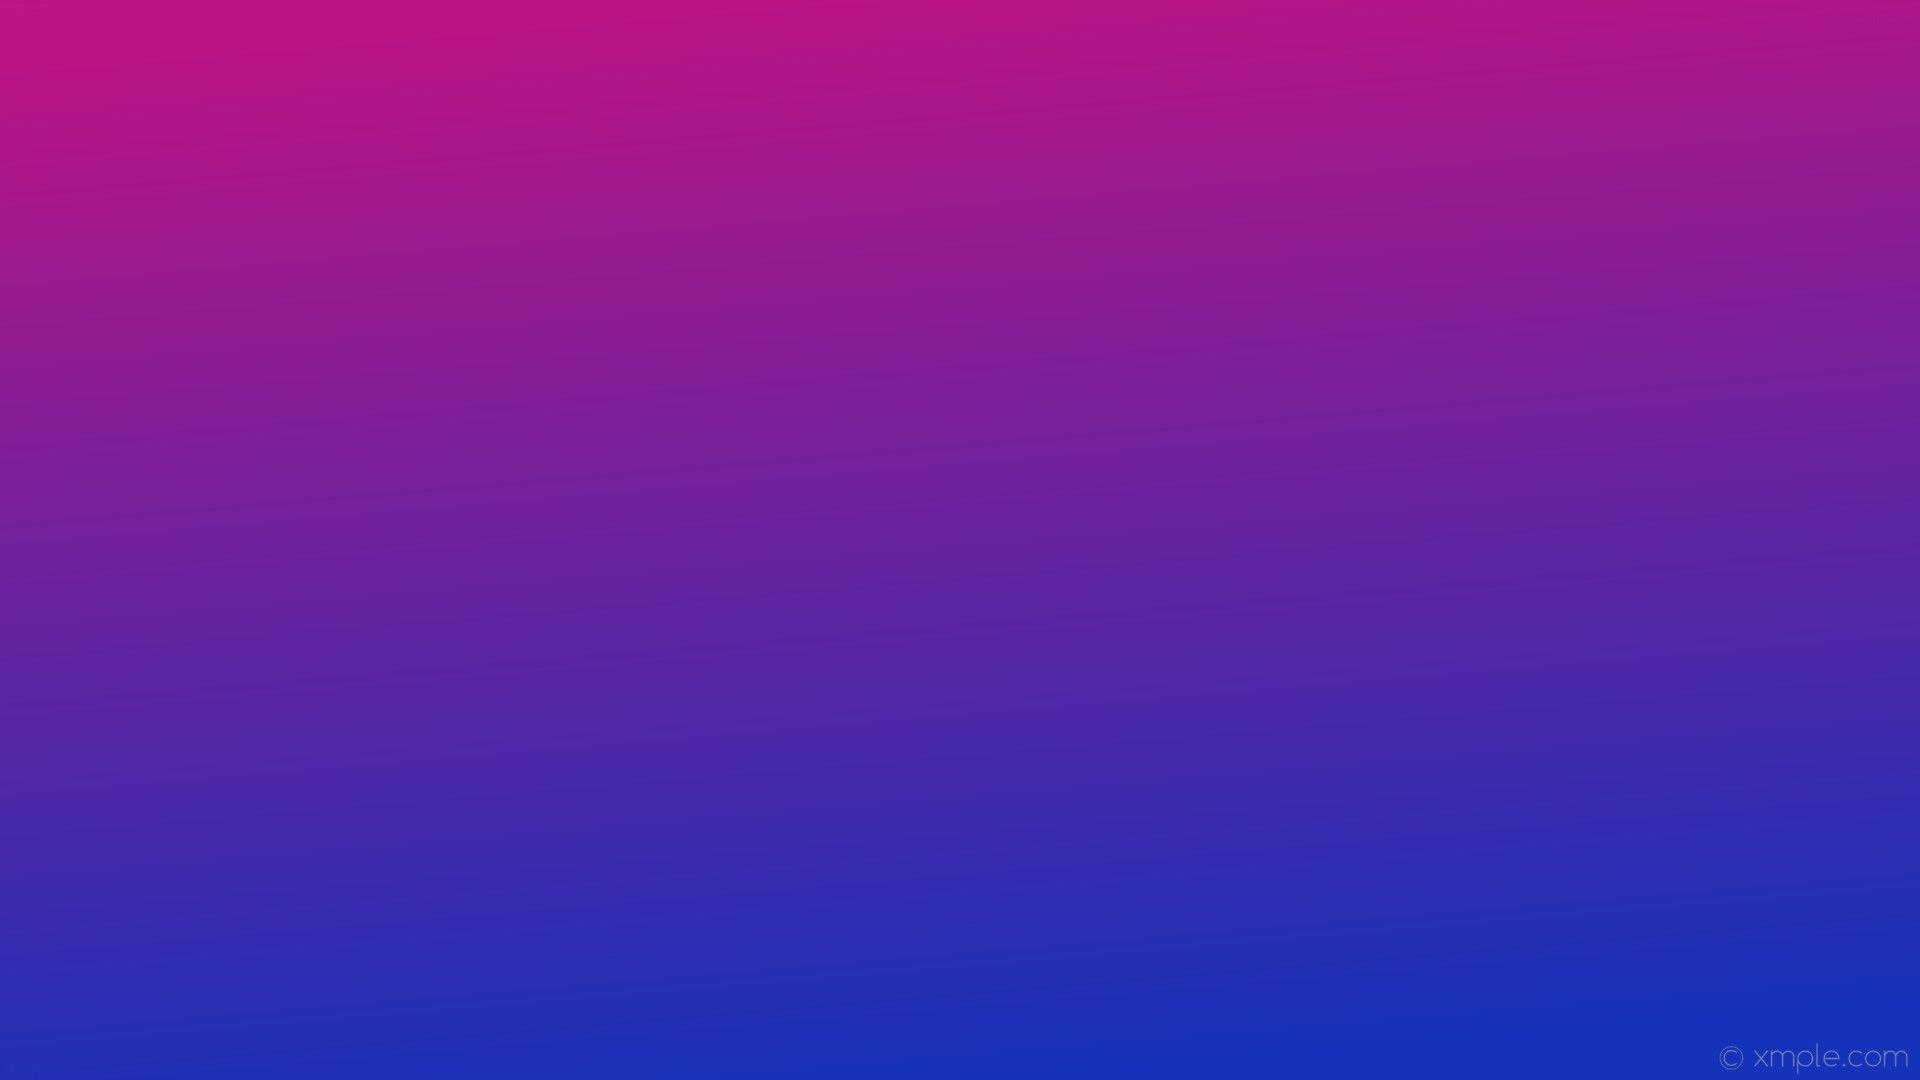 Free download Pink Purple Blue Ombre Wallpapers 4k HD Pink Purple Blue...